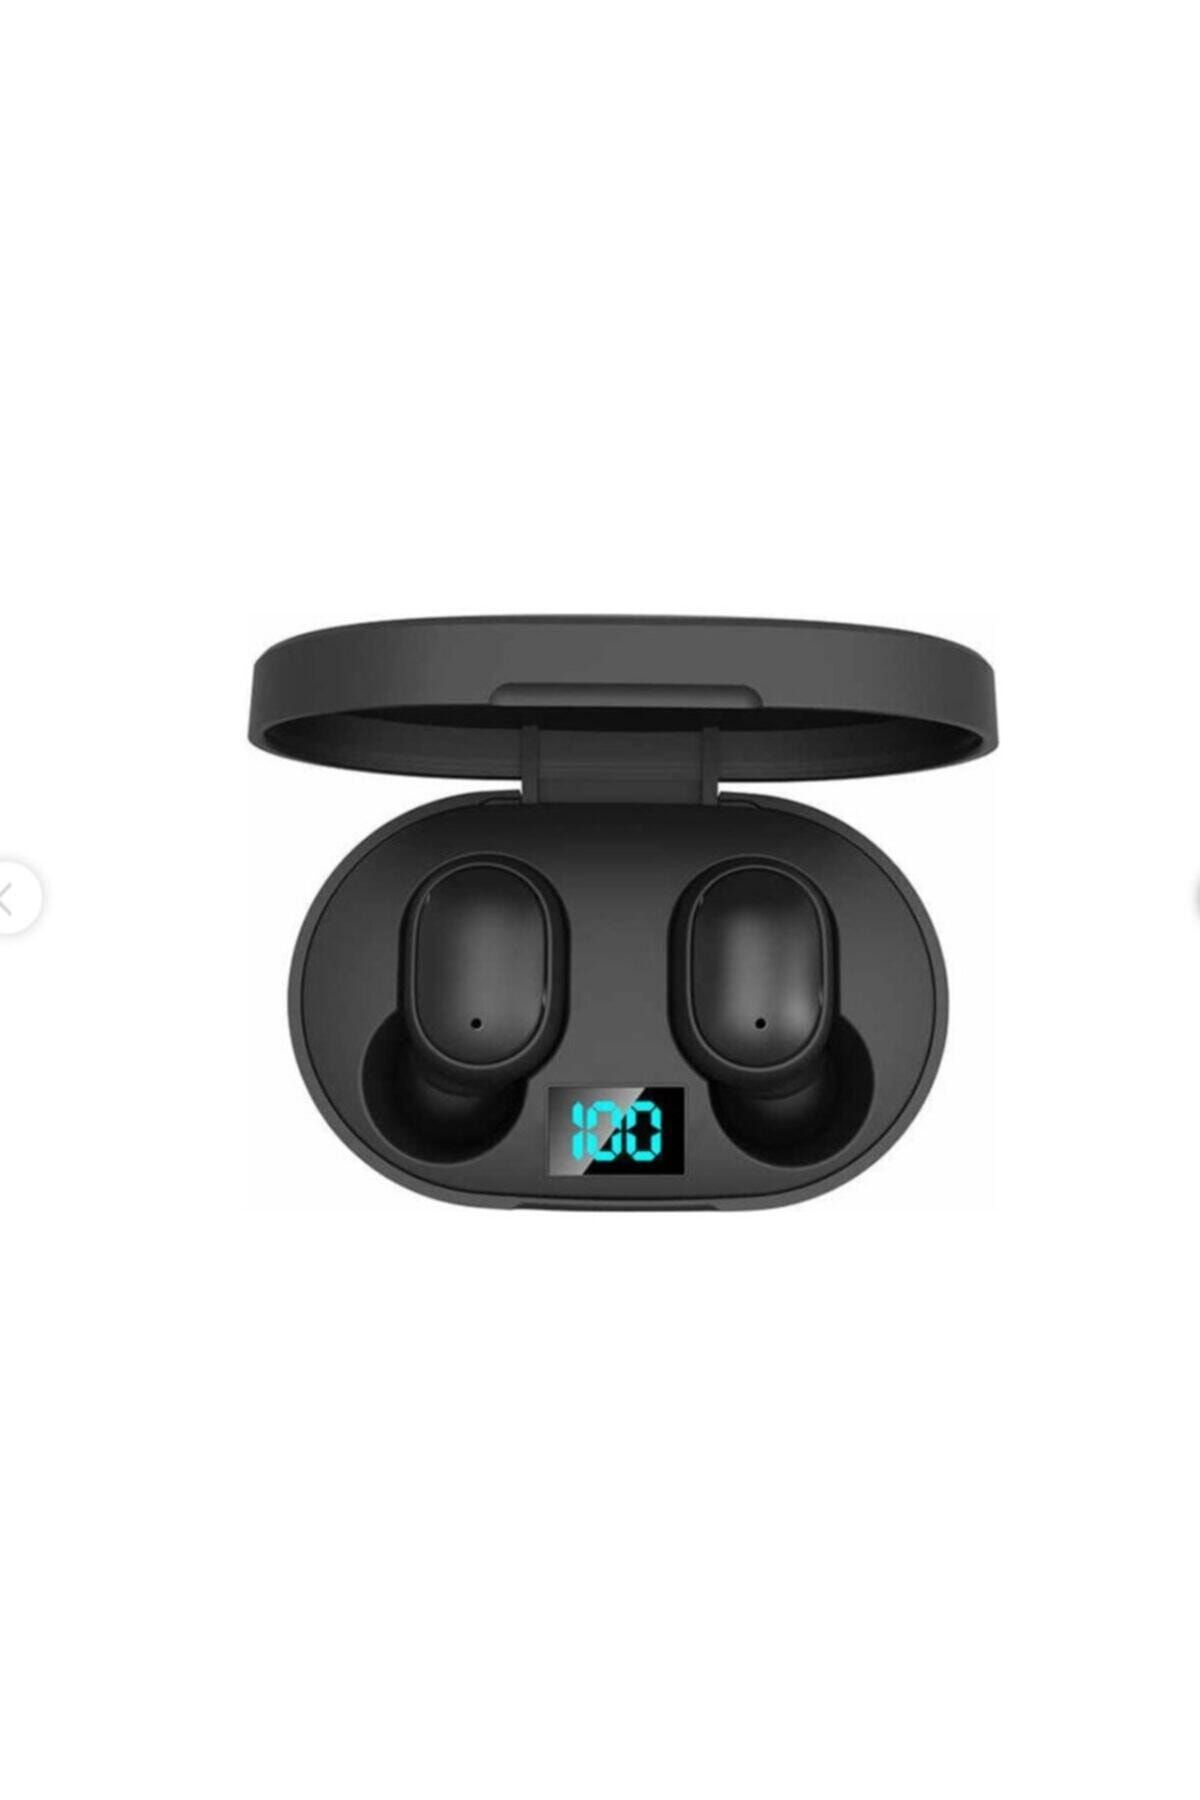 Soundmax E6s Şarj Göstergeli Kutulu Air Bluetooth Kulaklık